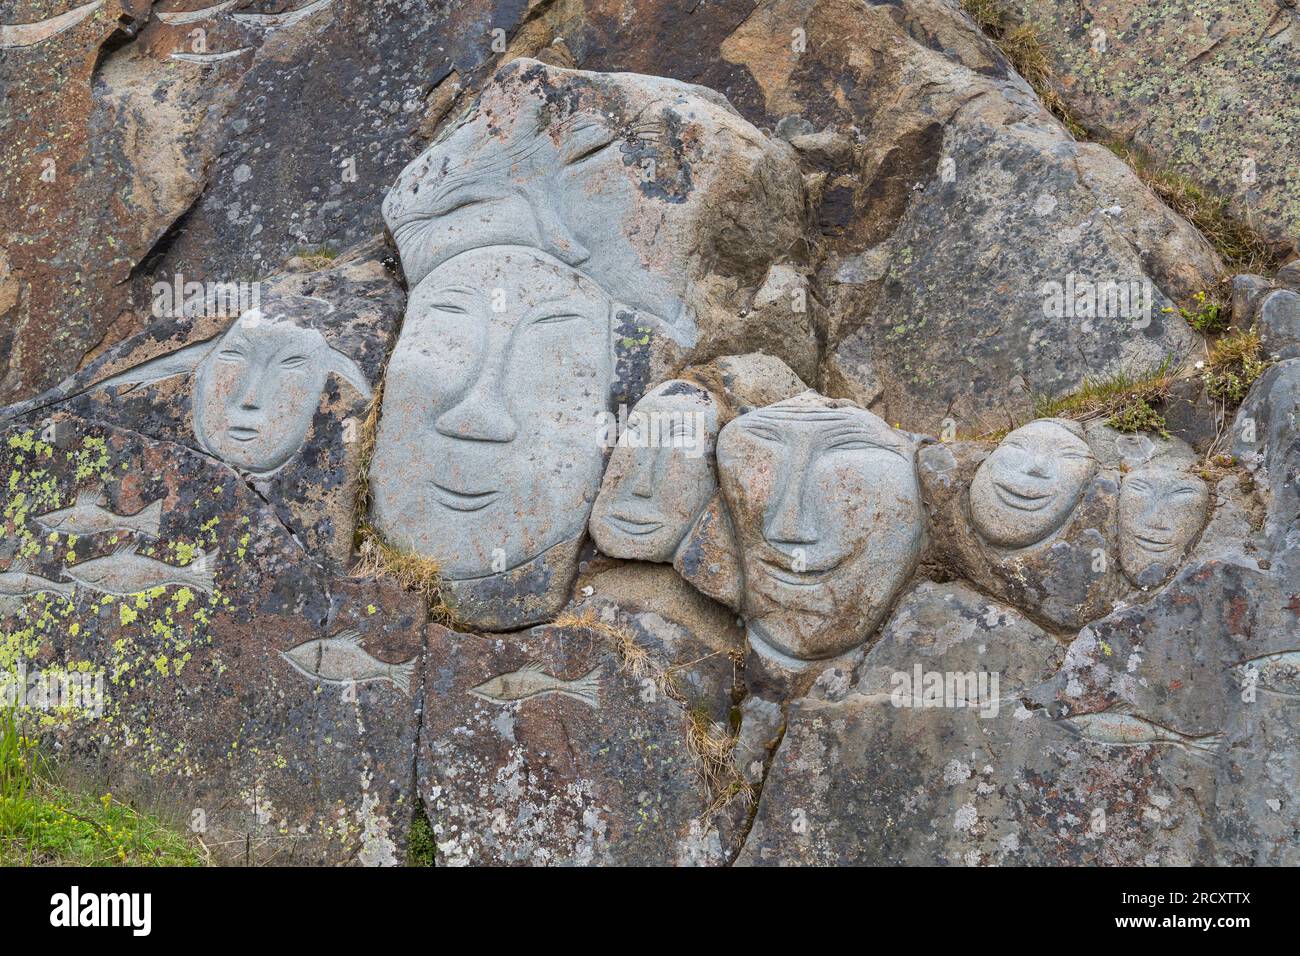 Visages, sculptures rupestres, dans le cadre du projet Stone & Man de l'artiste local aka Høegh à Qaqortoq, Groenland en juillet Banque D'Images